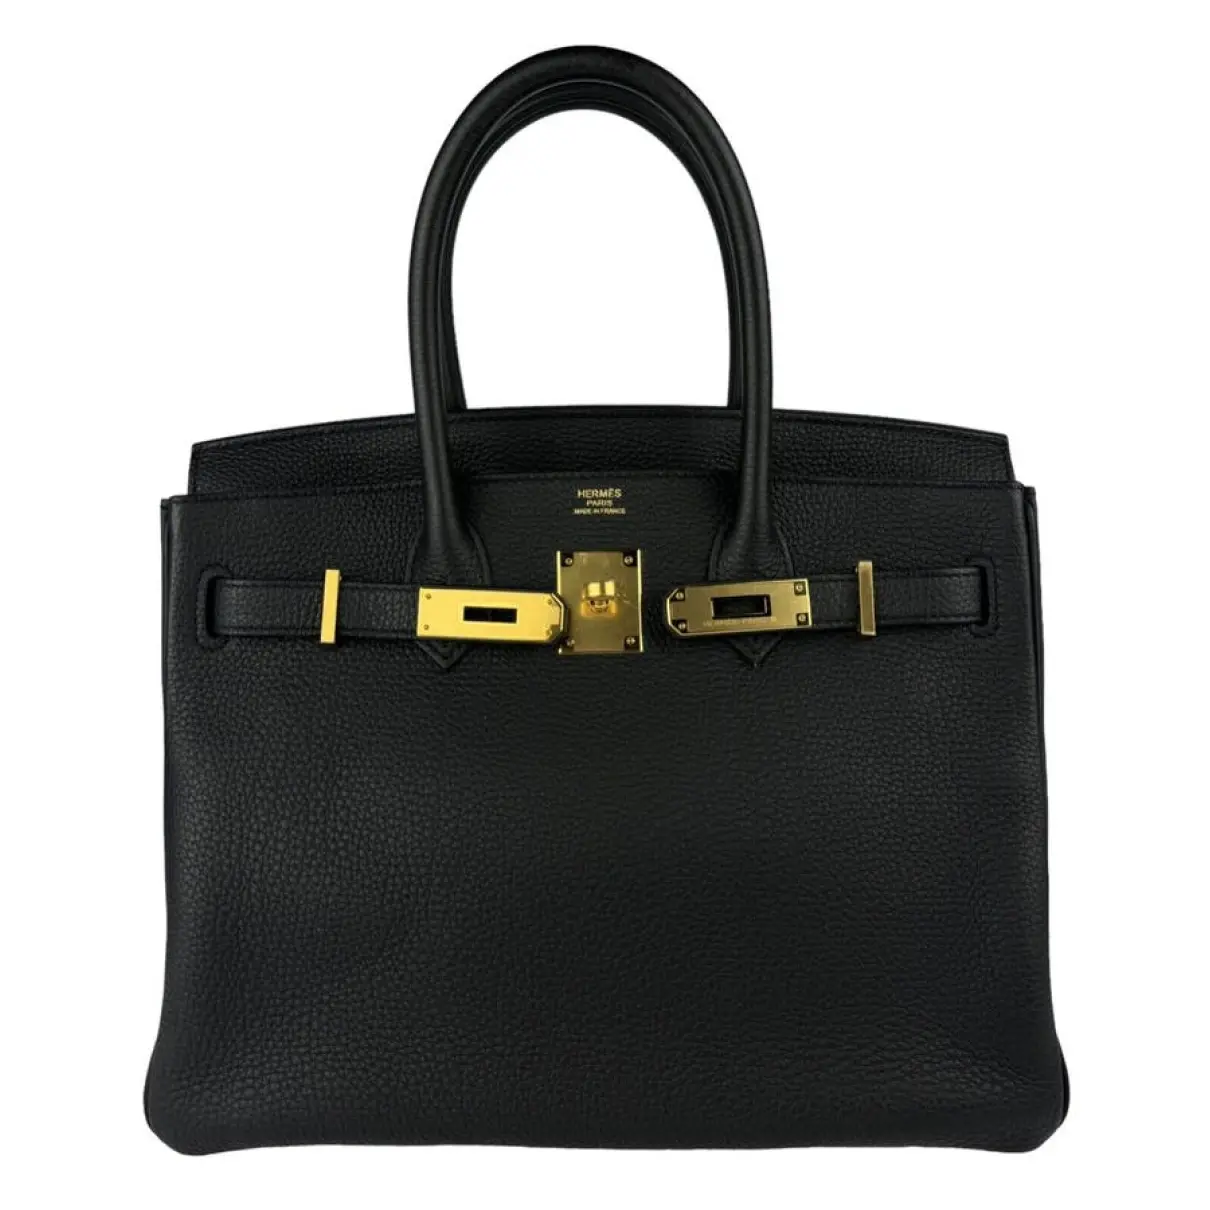 Buy Hermès Birkin 30 leather satchel online